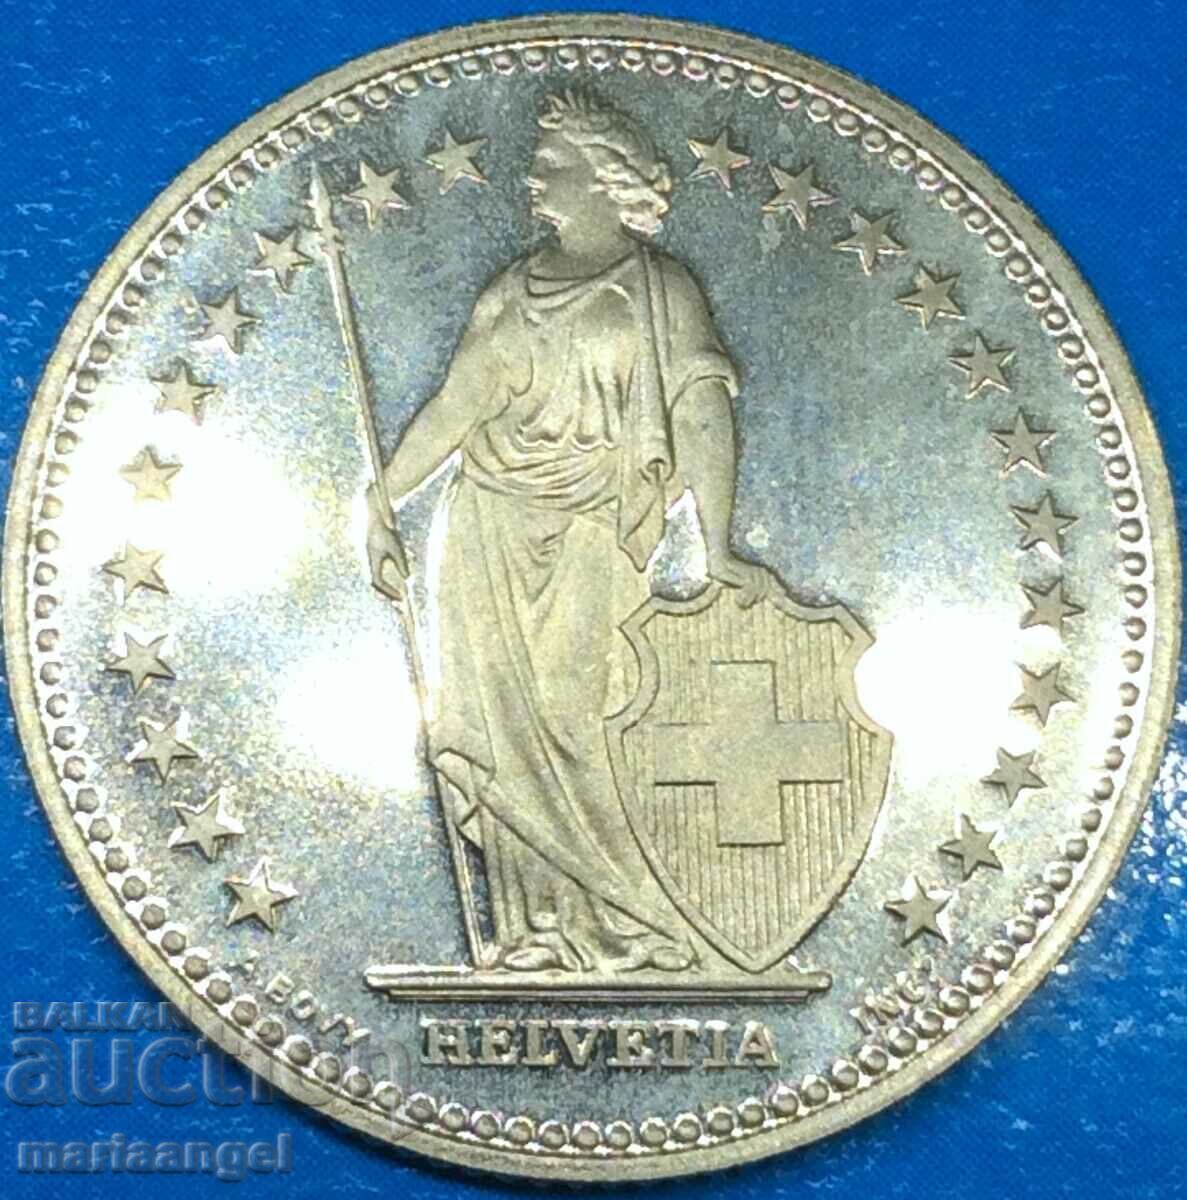 Switzerland 1 franc 1992 Helvetia PROOF UNC